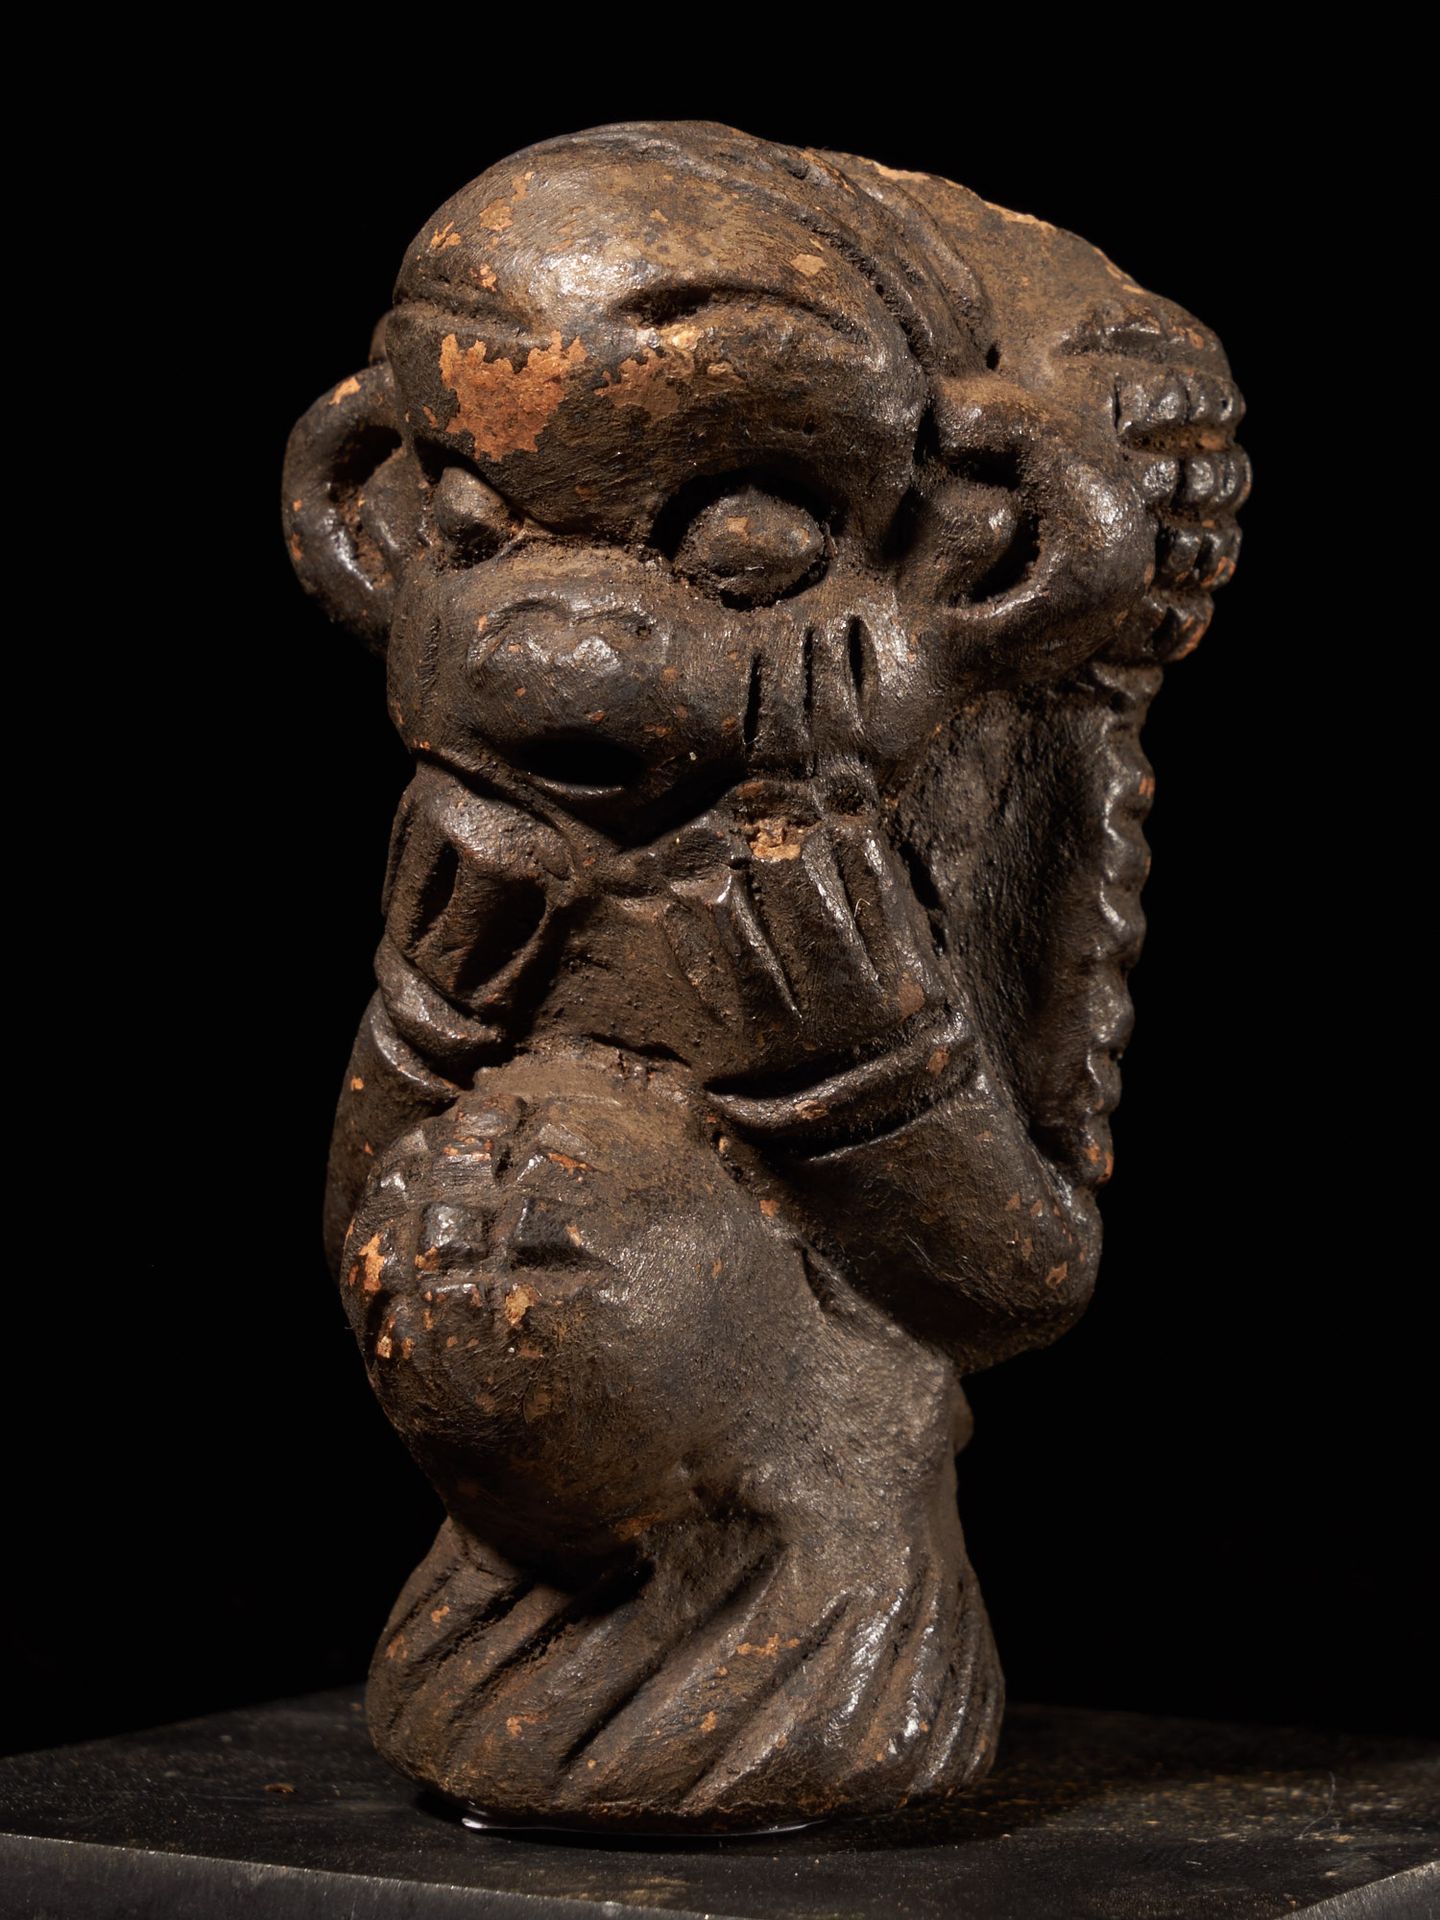 Peuple tikar Tabakpfeife aus Keramik vom Volk der Tikar, Kamerun - 8,5*5*7,5 cm